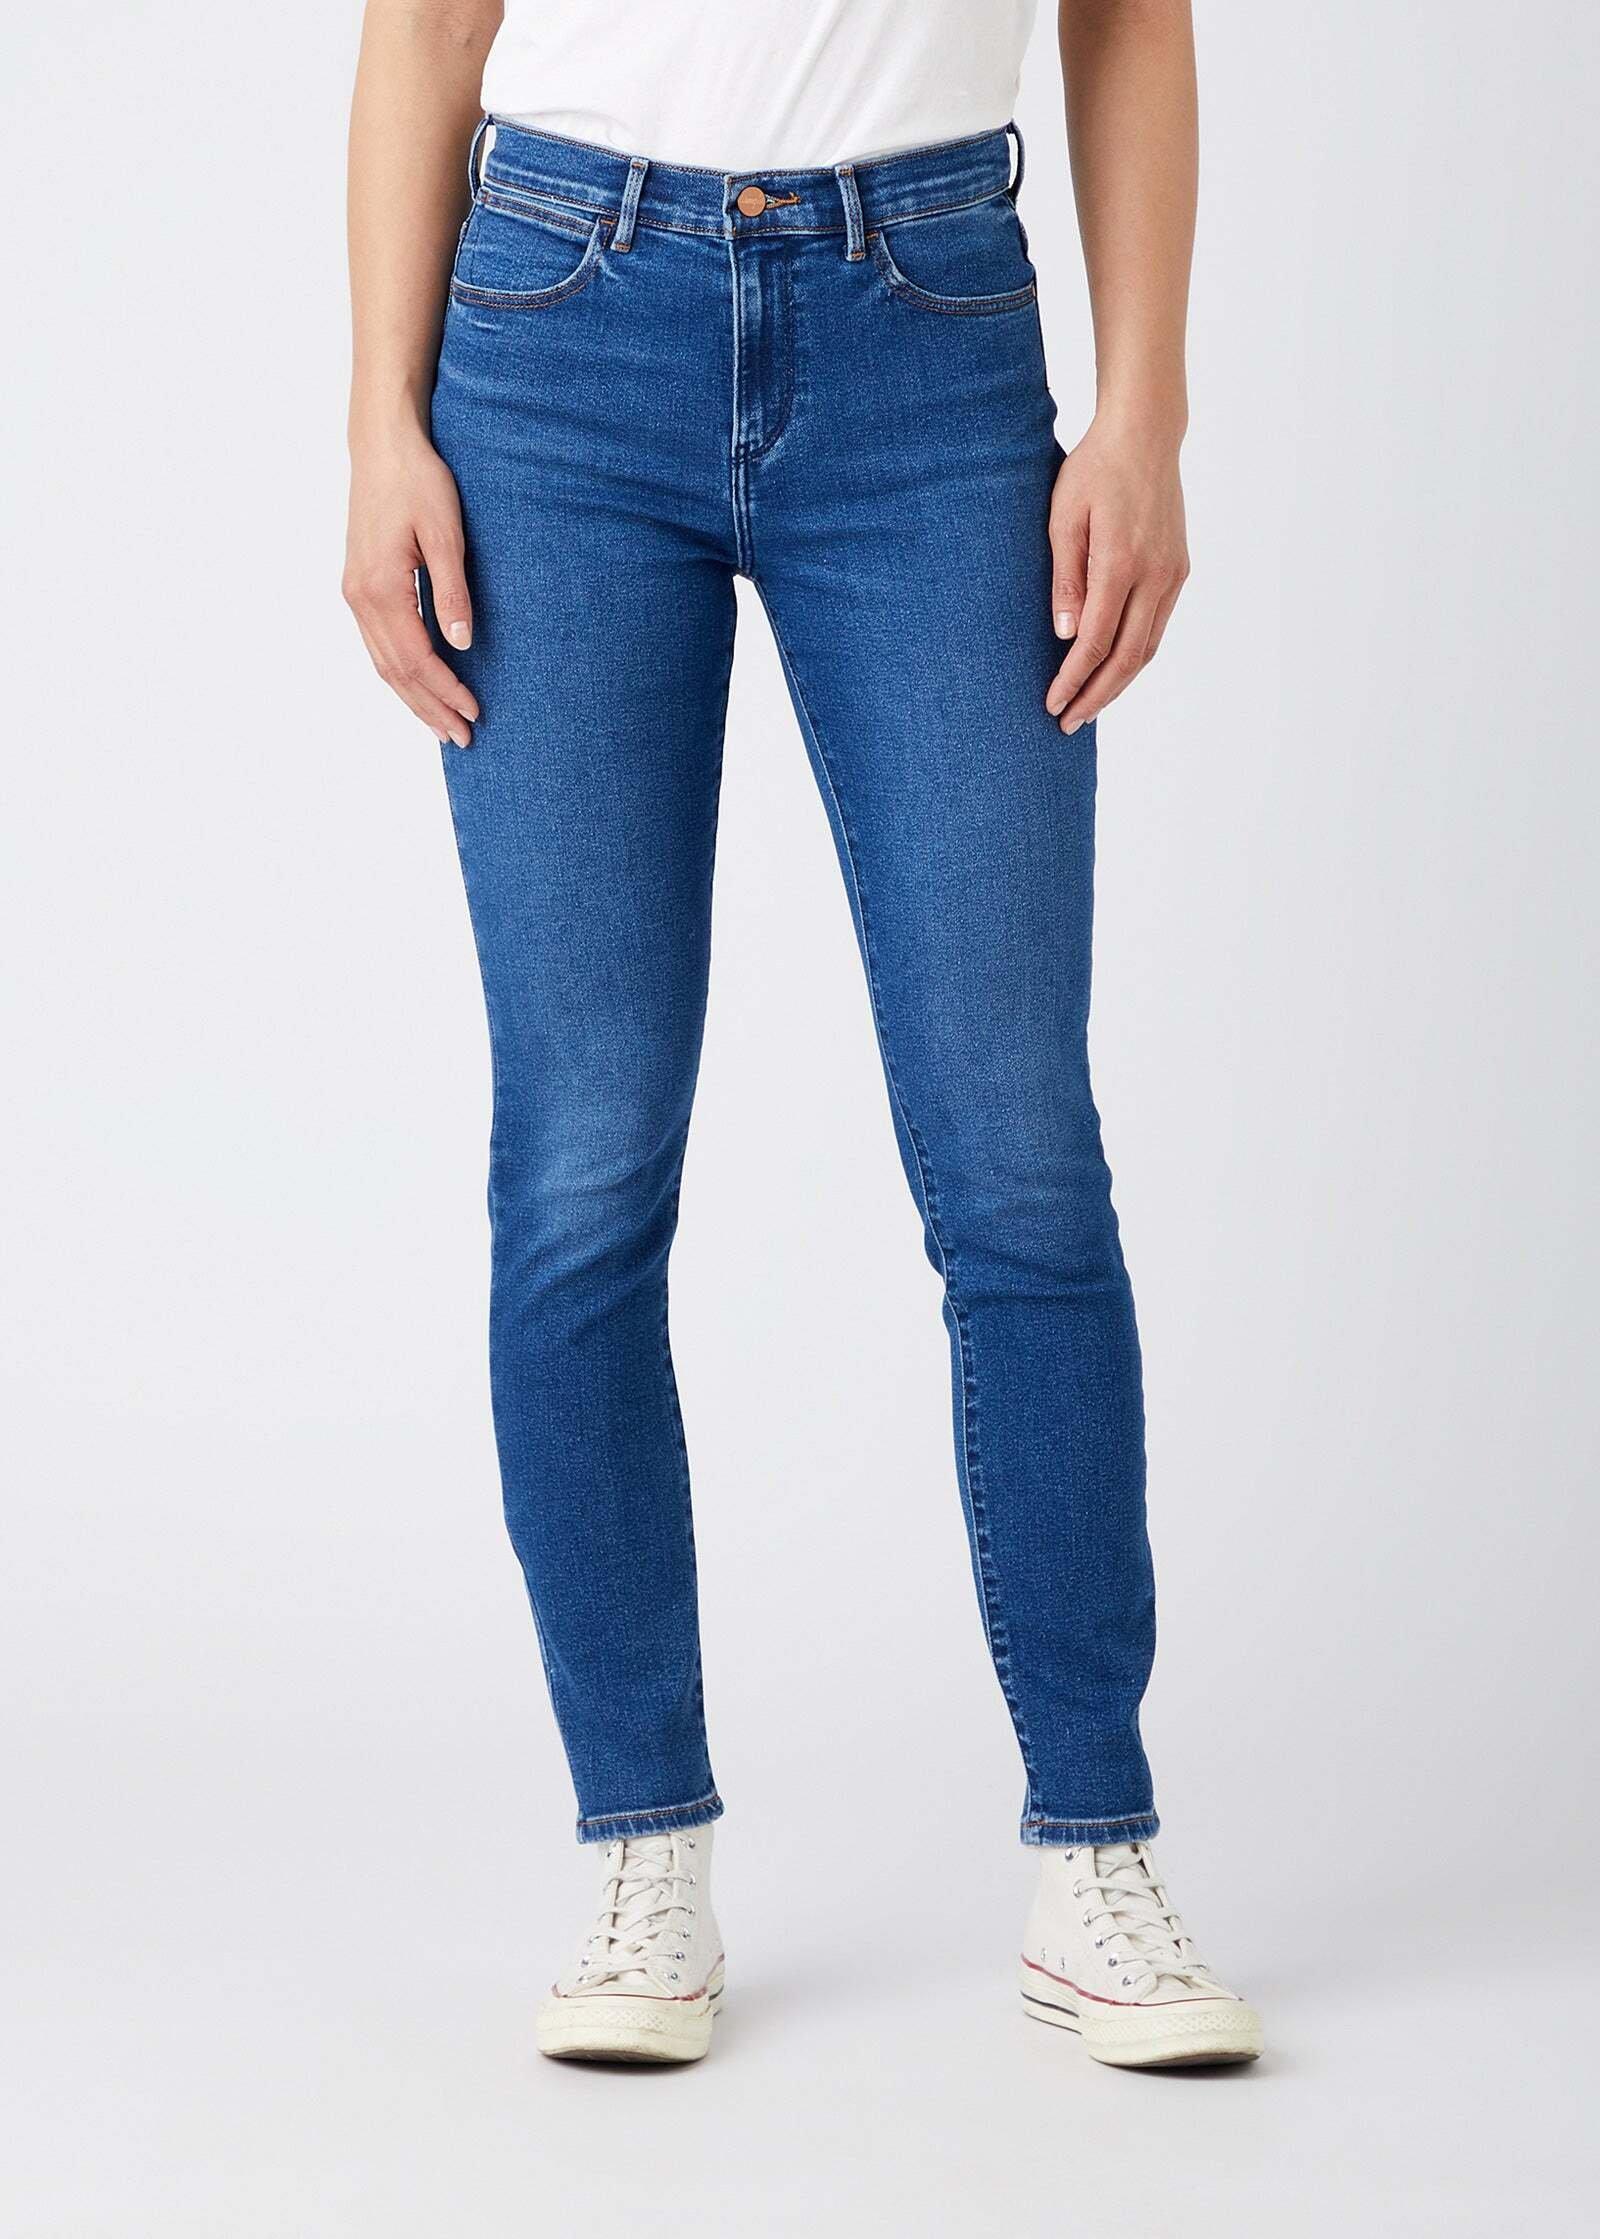 Jeans Skinny Fit High Rise Damen Blau Denim L32/W31 von Wrangler